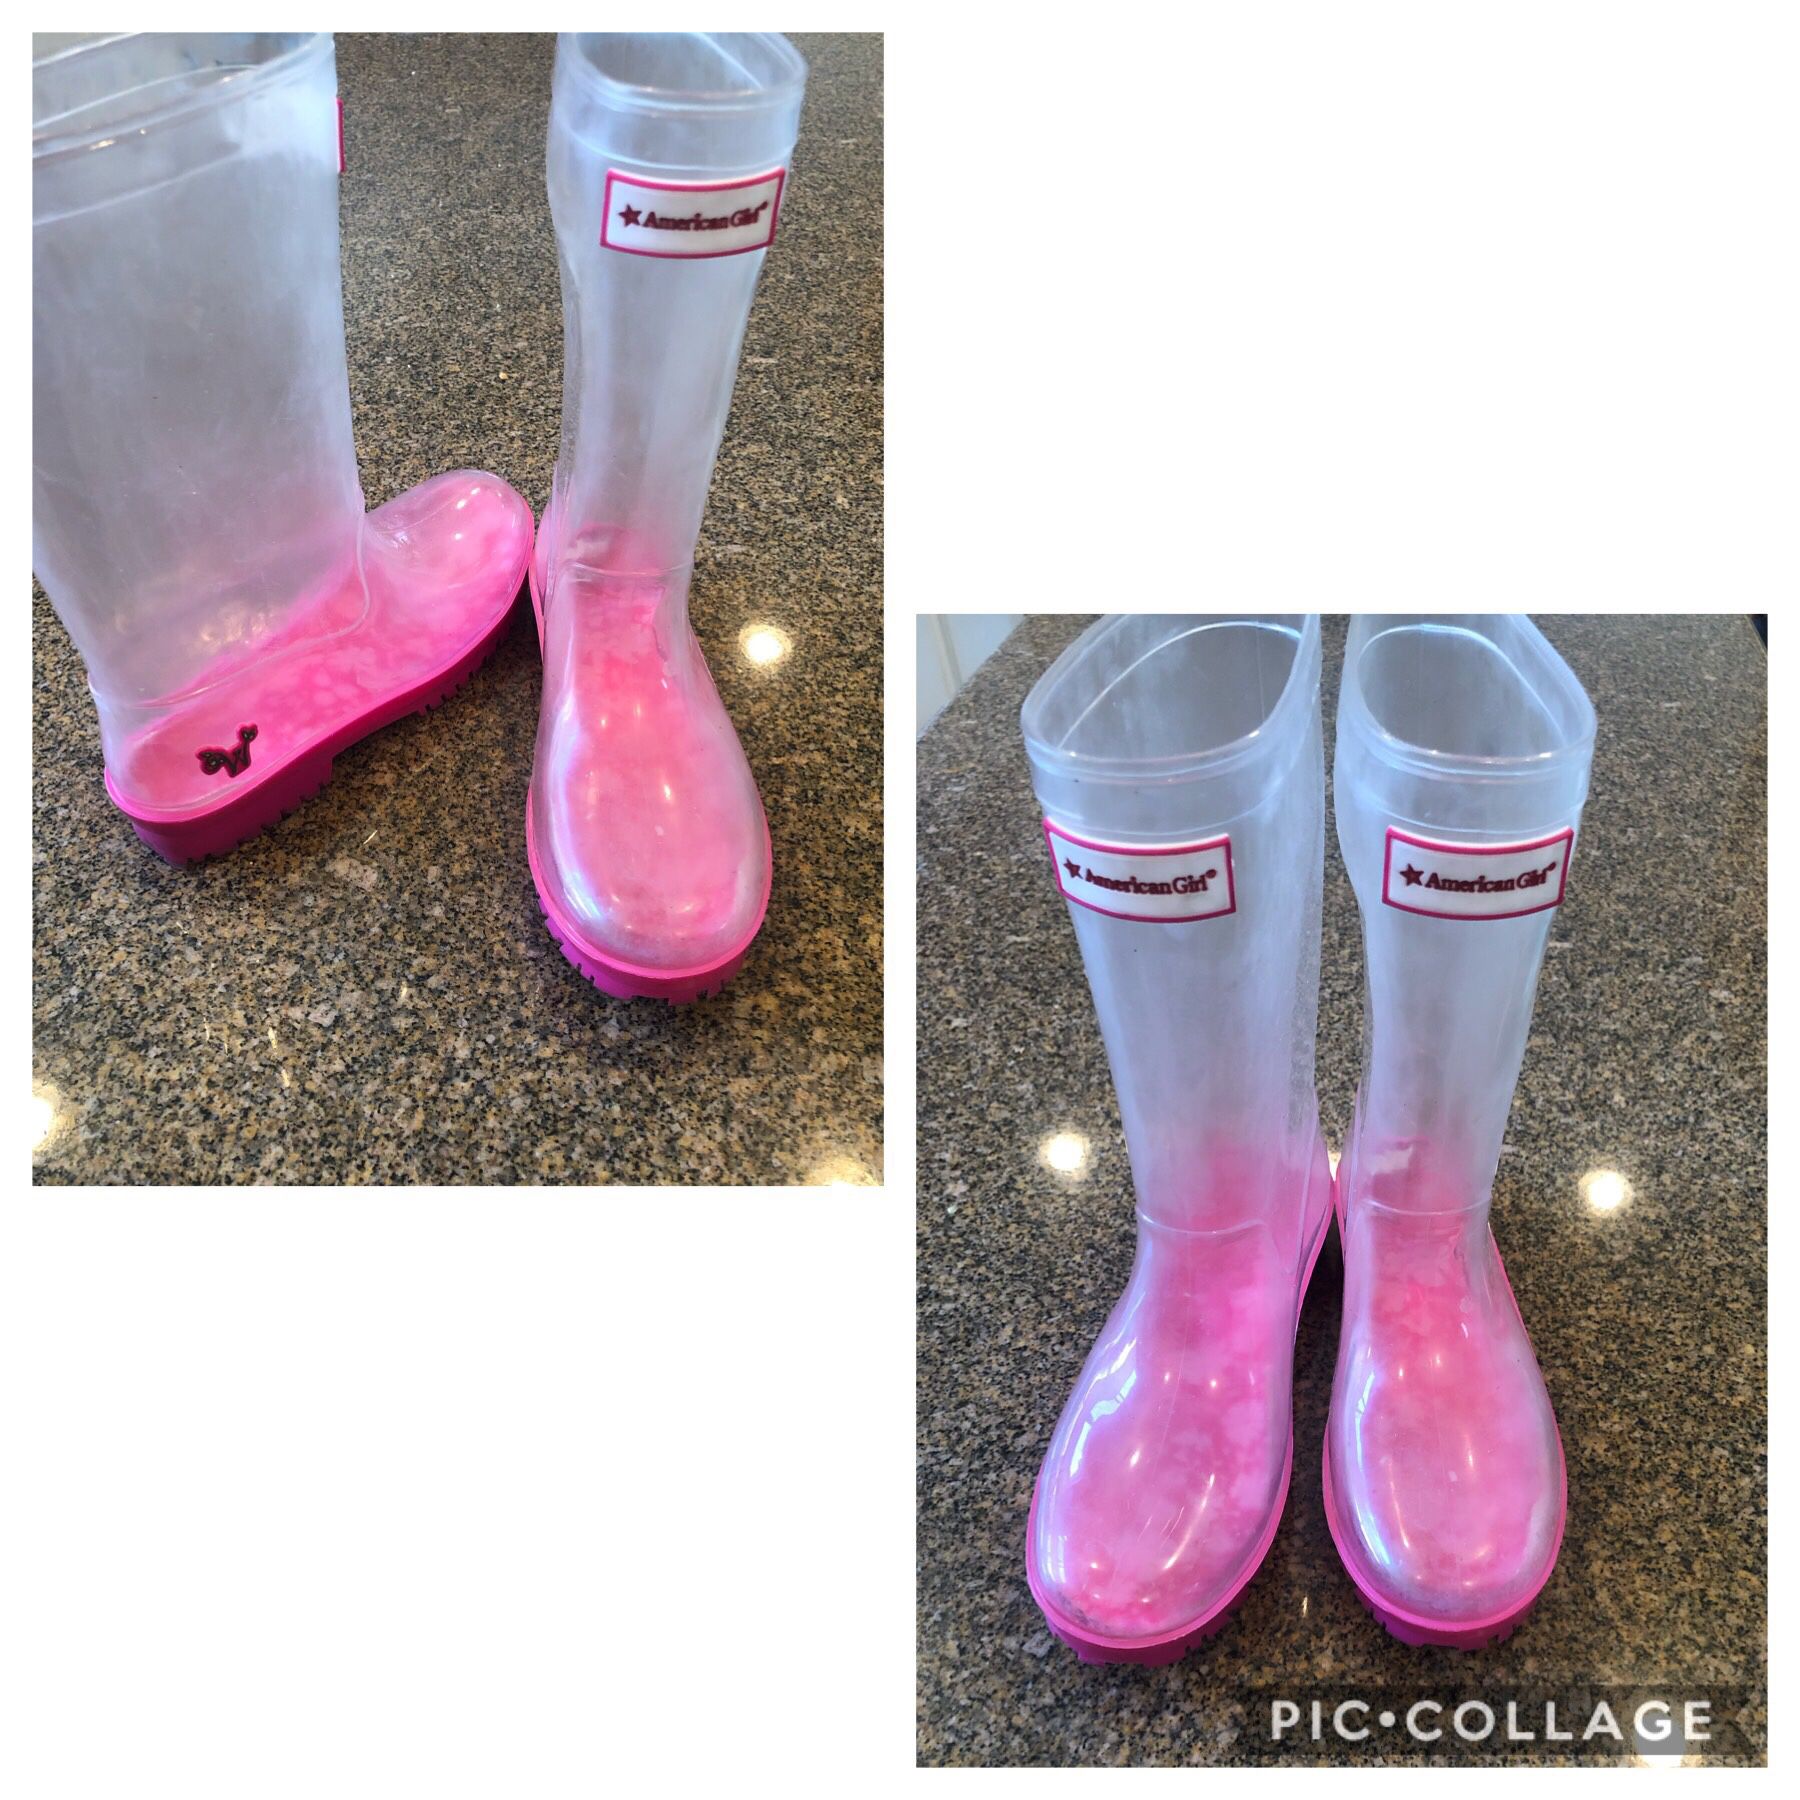 American Girl rain boots size 2